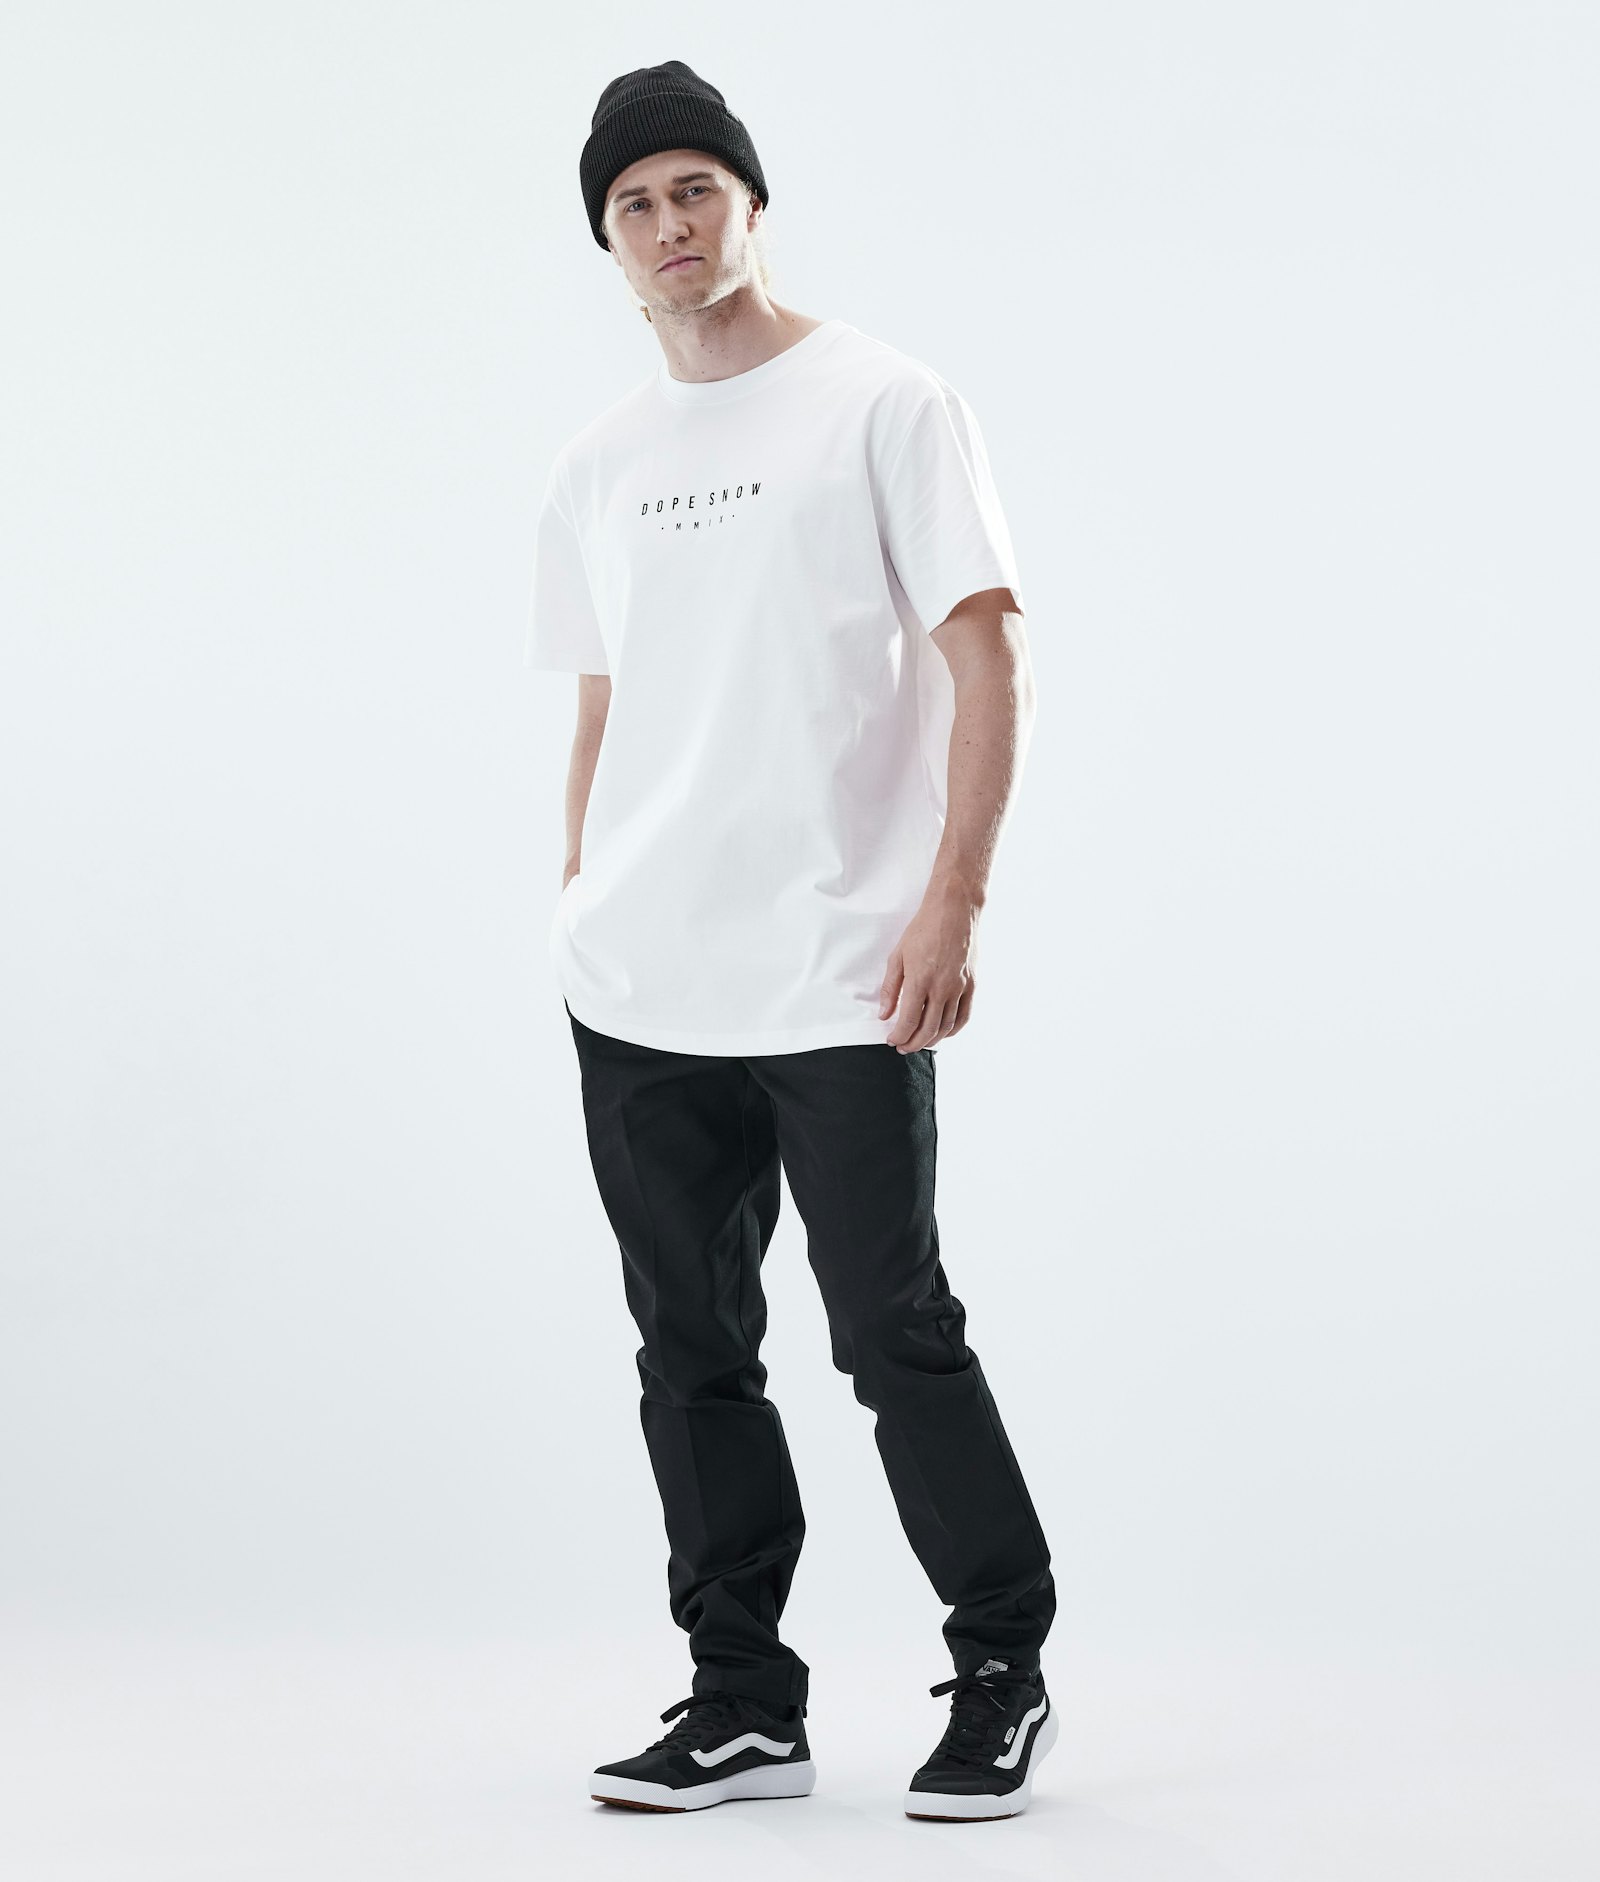 Daily T-shirt Homme Range White